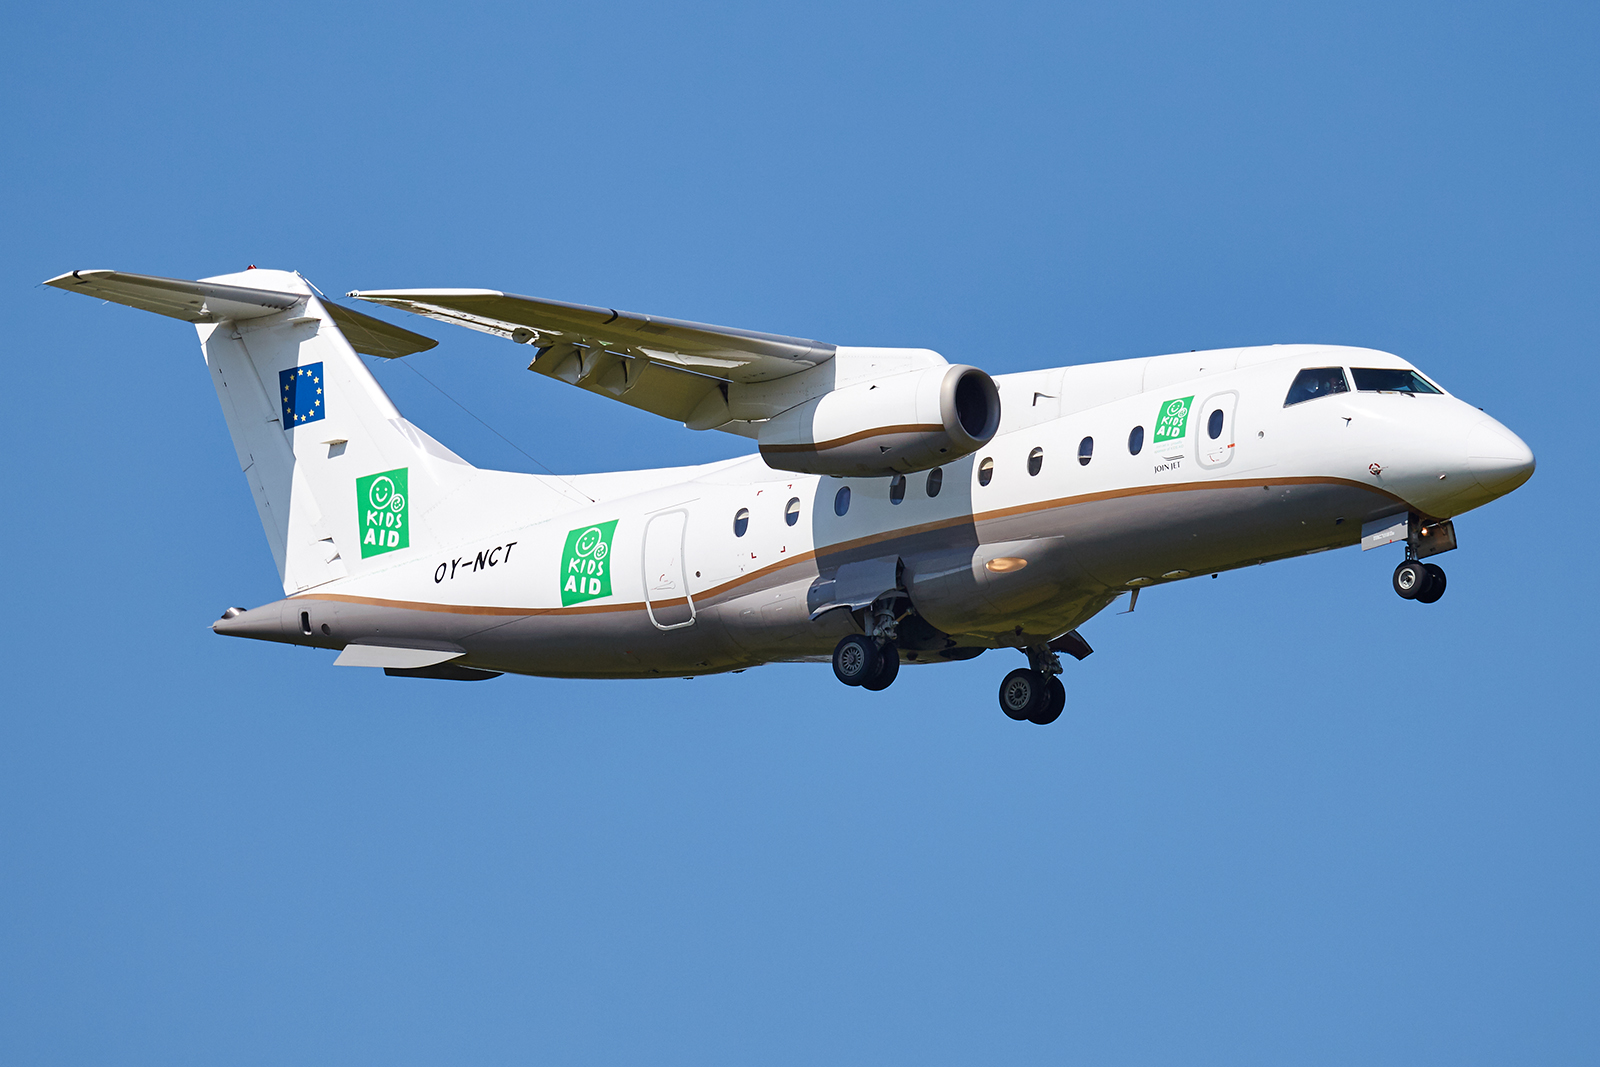 [24/05/20196] Dornier Do-328 Jet (OY-NCT) Sun-Air of Scandinavia "Kids Aid" Livery 1905240958215493216250018